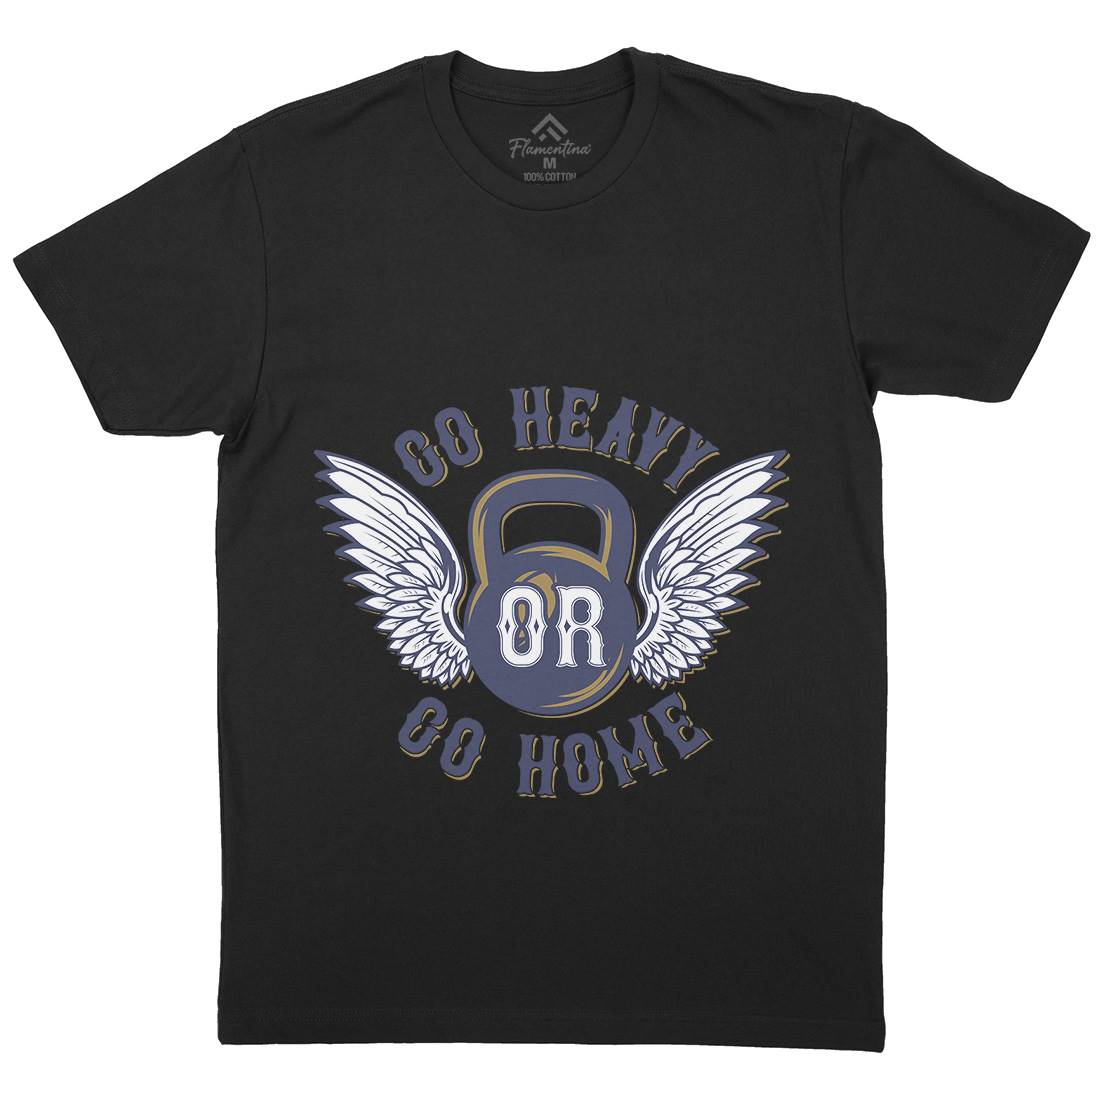 Heavy Mens Organic Crew Neck T-Shirt Gym B303